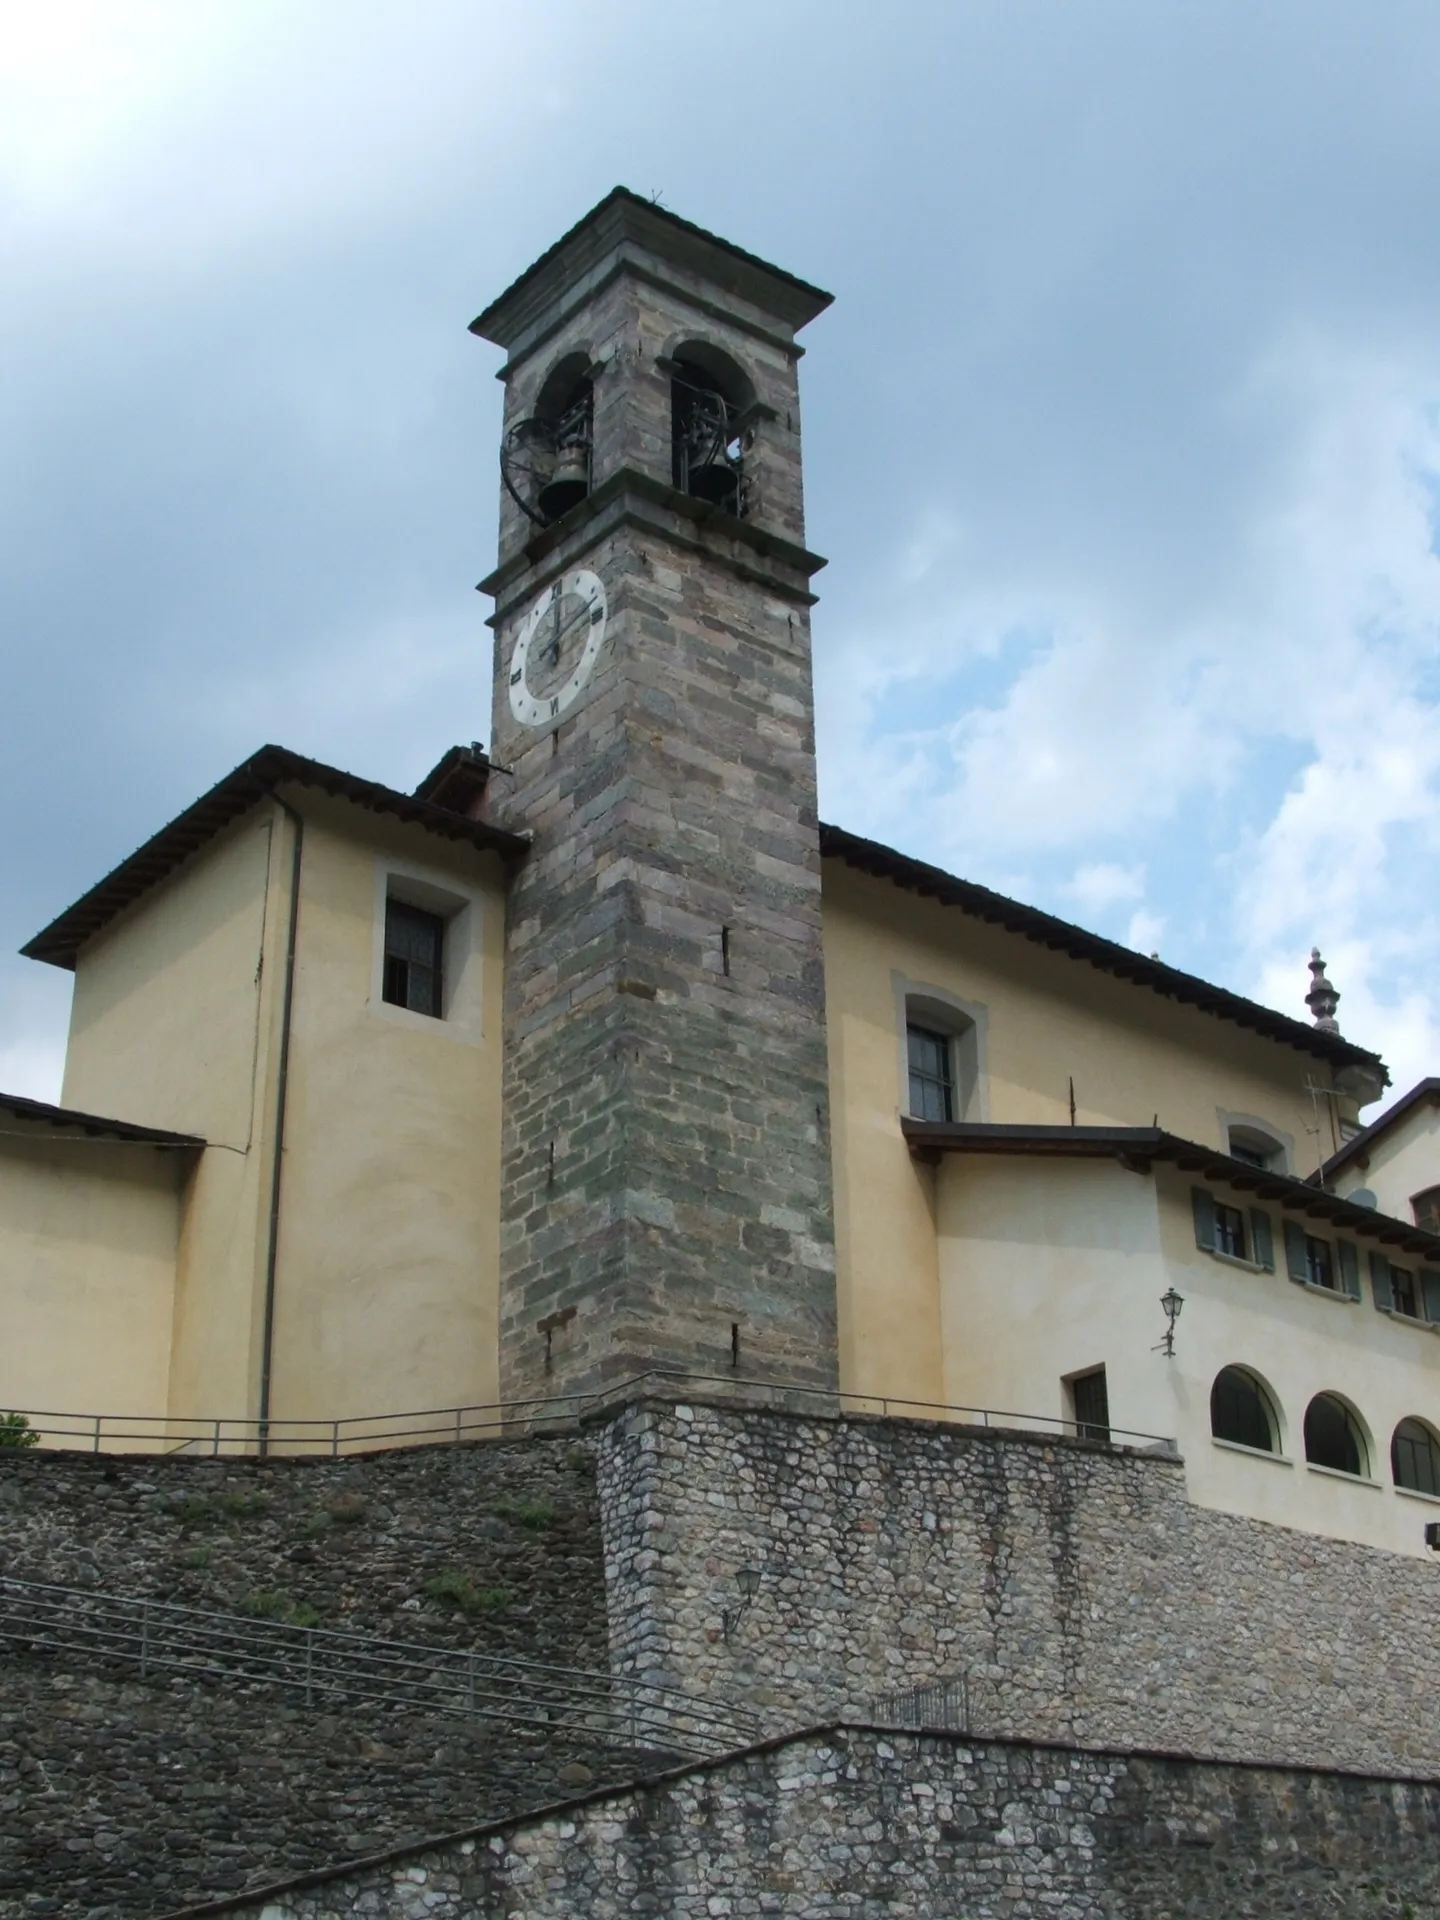 Photo showing: Branzi (BG), Lombardy, Italy - Church tower